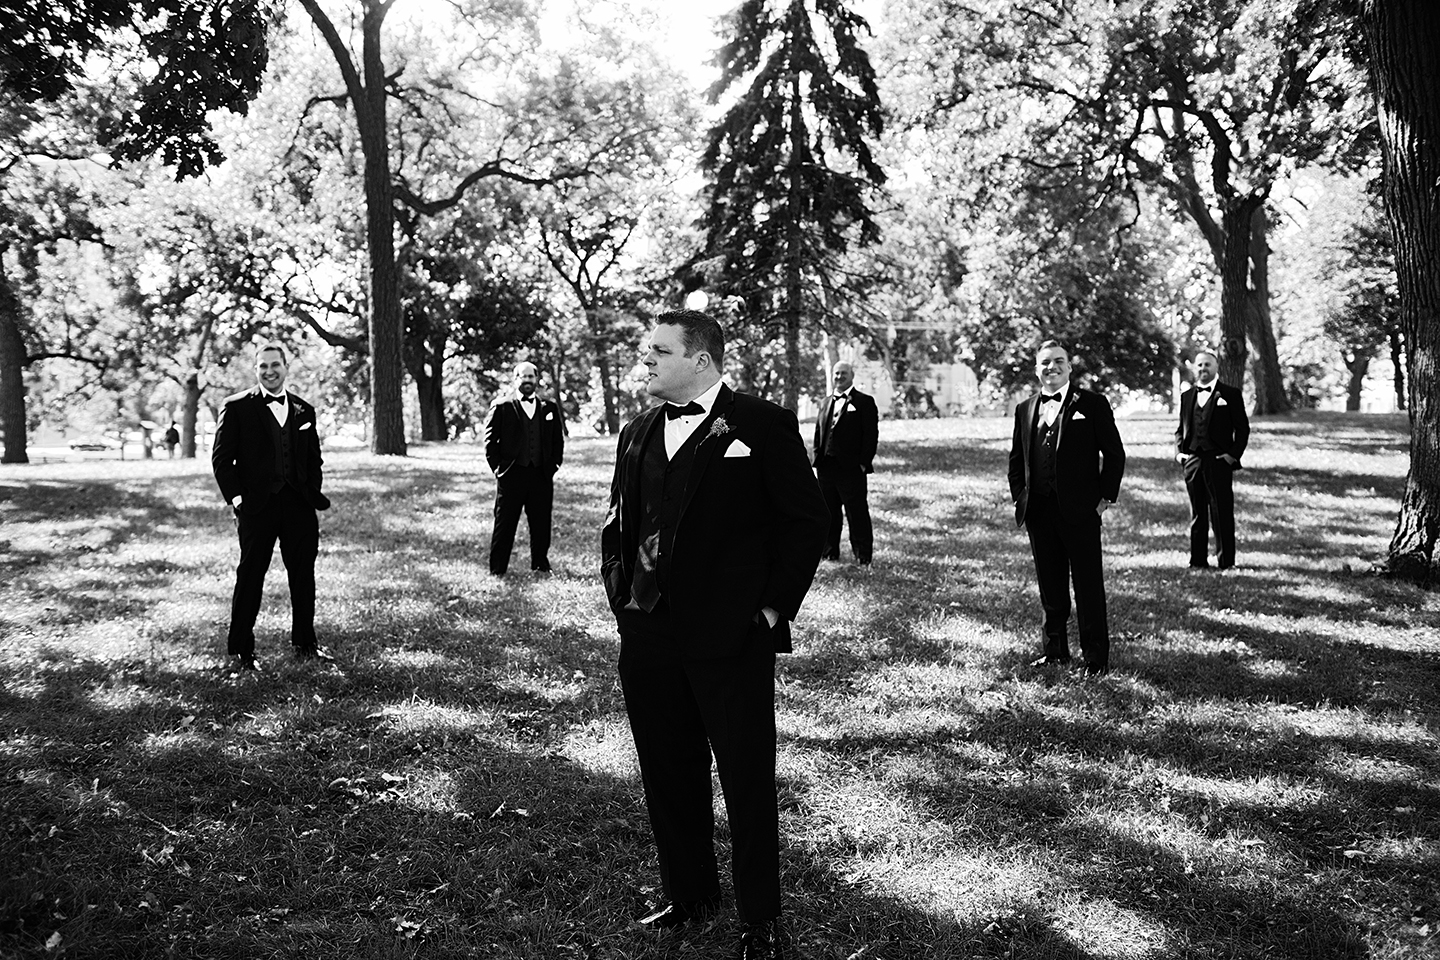 Hennepin Ave. United Methodist Church Wedding | Photography by Photogen Inc. | Eliesa Johnson | Based in Minneapolis, Minnesota